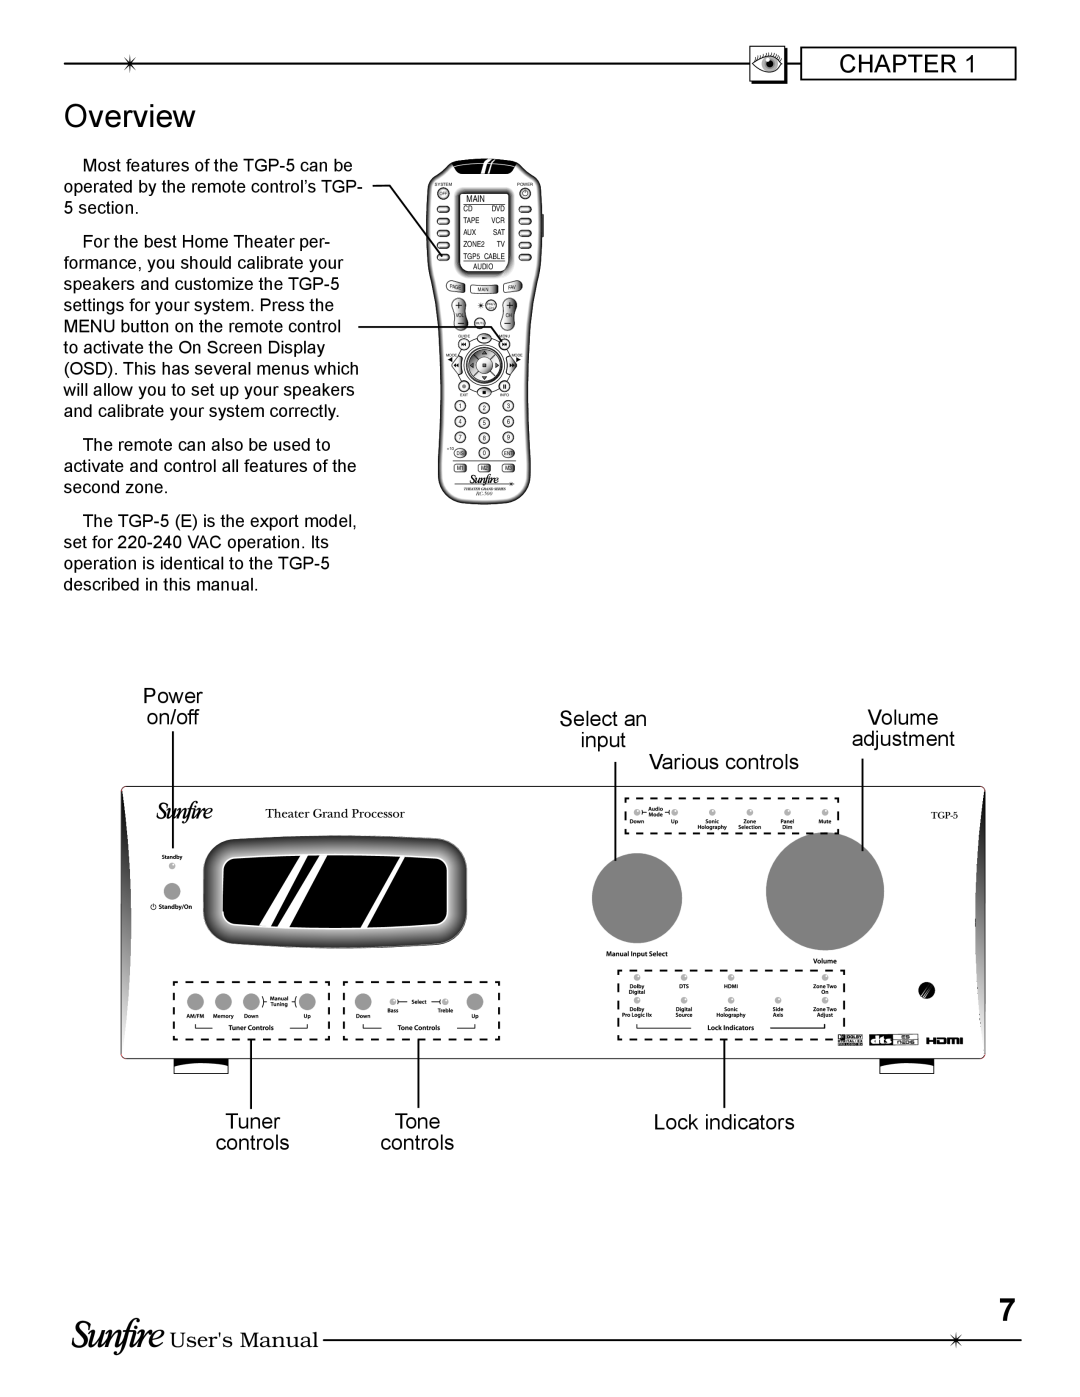 Sunfire TGP-5(E) Overview, Power on/offSelect anVolume, inputadjustment Various controls, Tuner, Tone, Lock indicators 